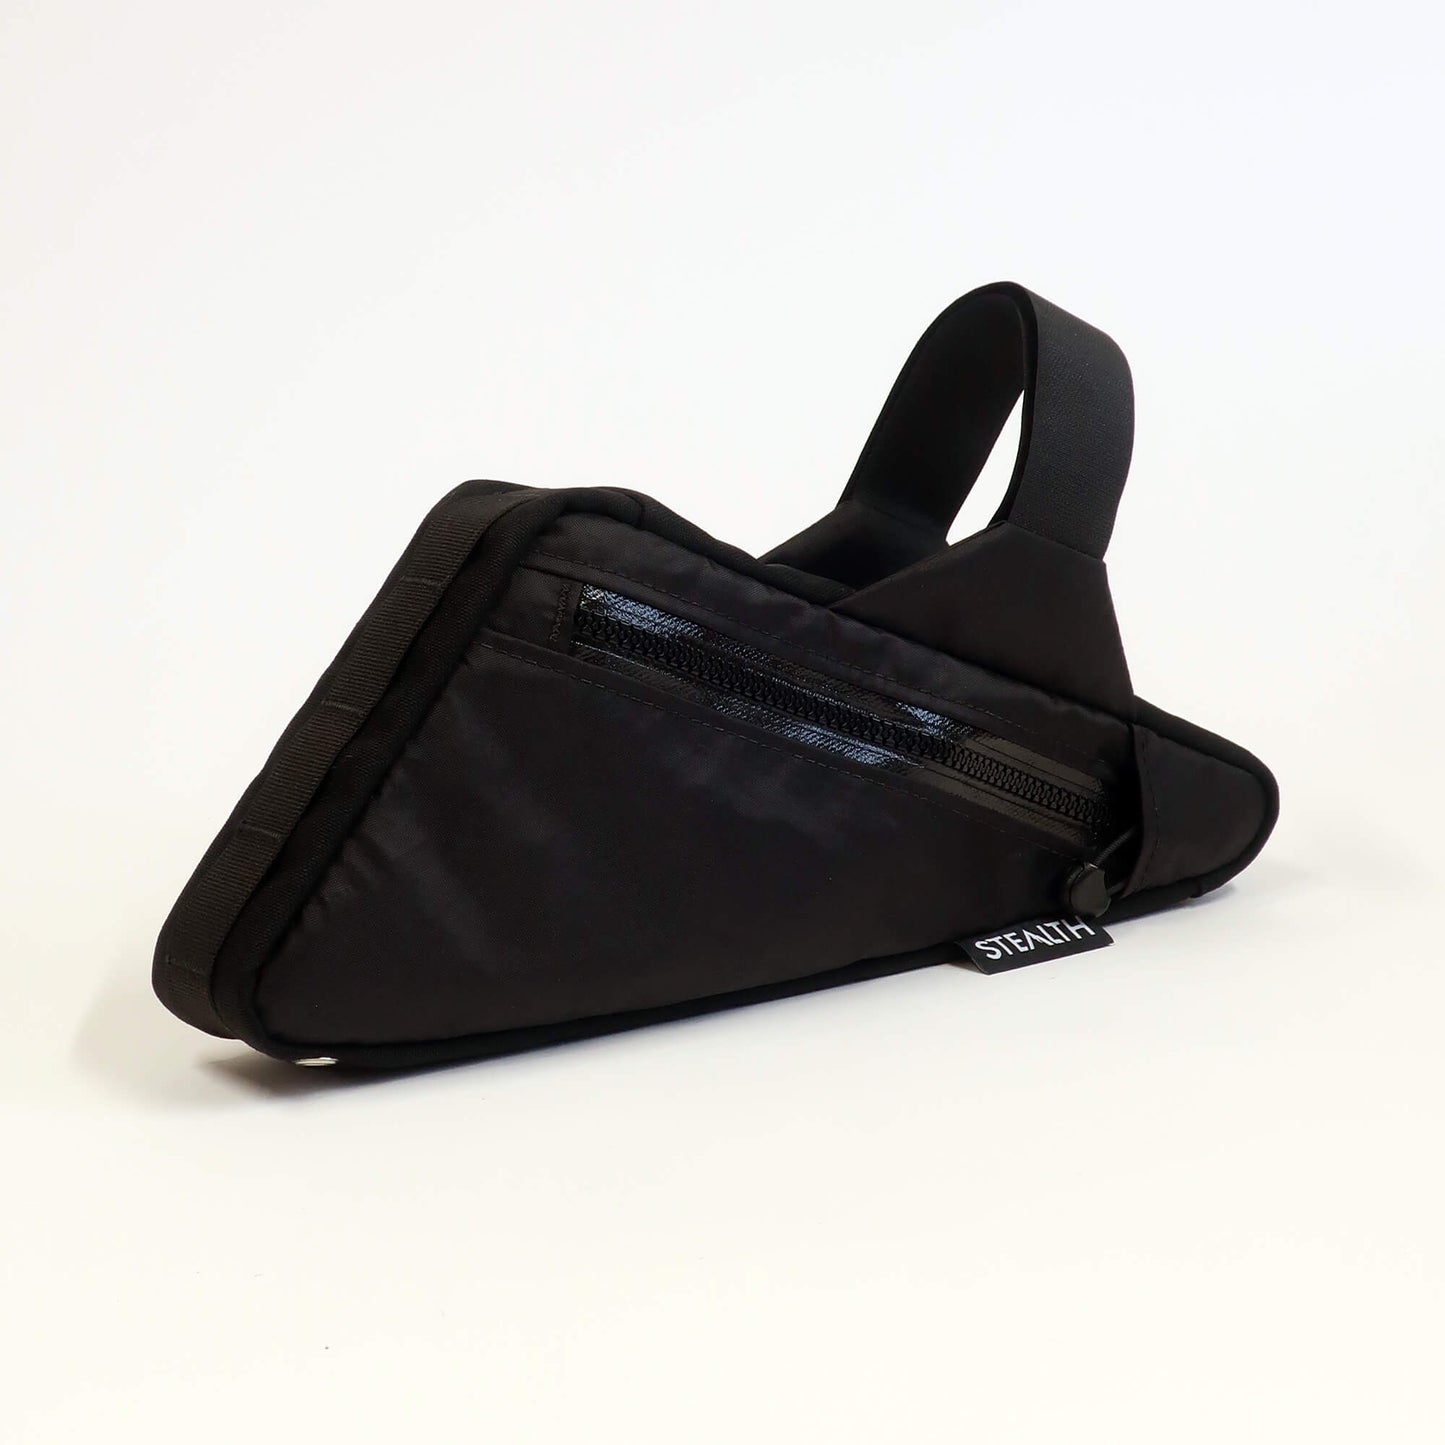 Custom single zip frame bag for full suspension with horizontal shock